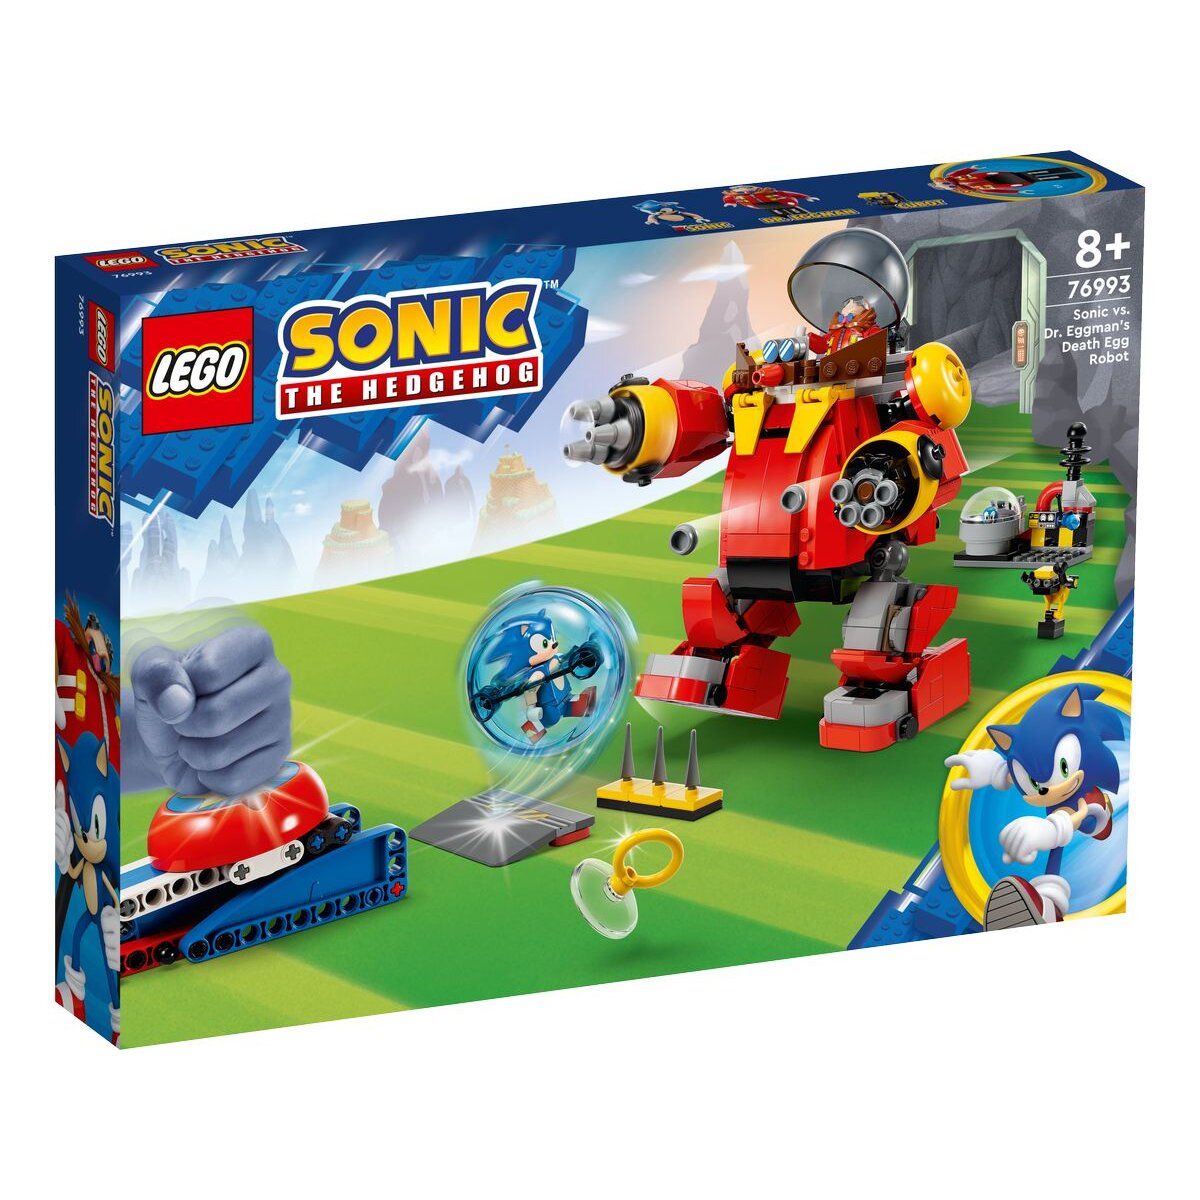 LEGO® Sonic the Hedgehog™ 76993 Sonic vs. Dr. Eggman's Death Egg Robot